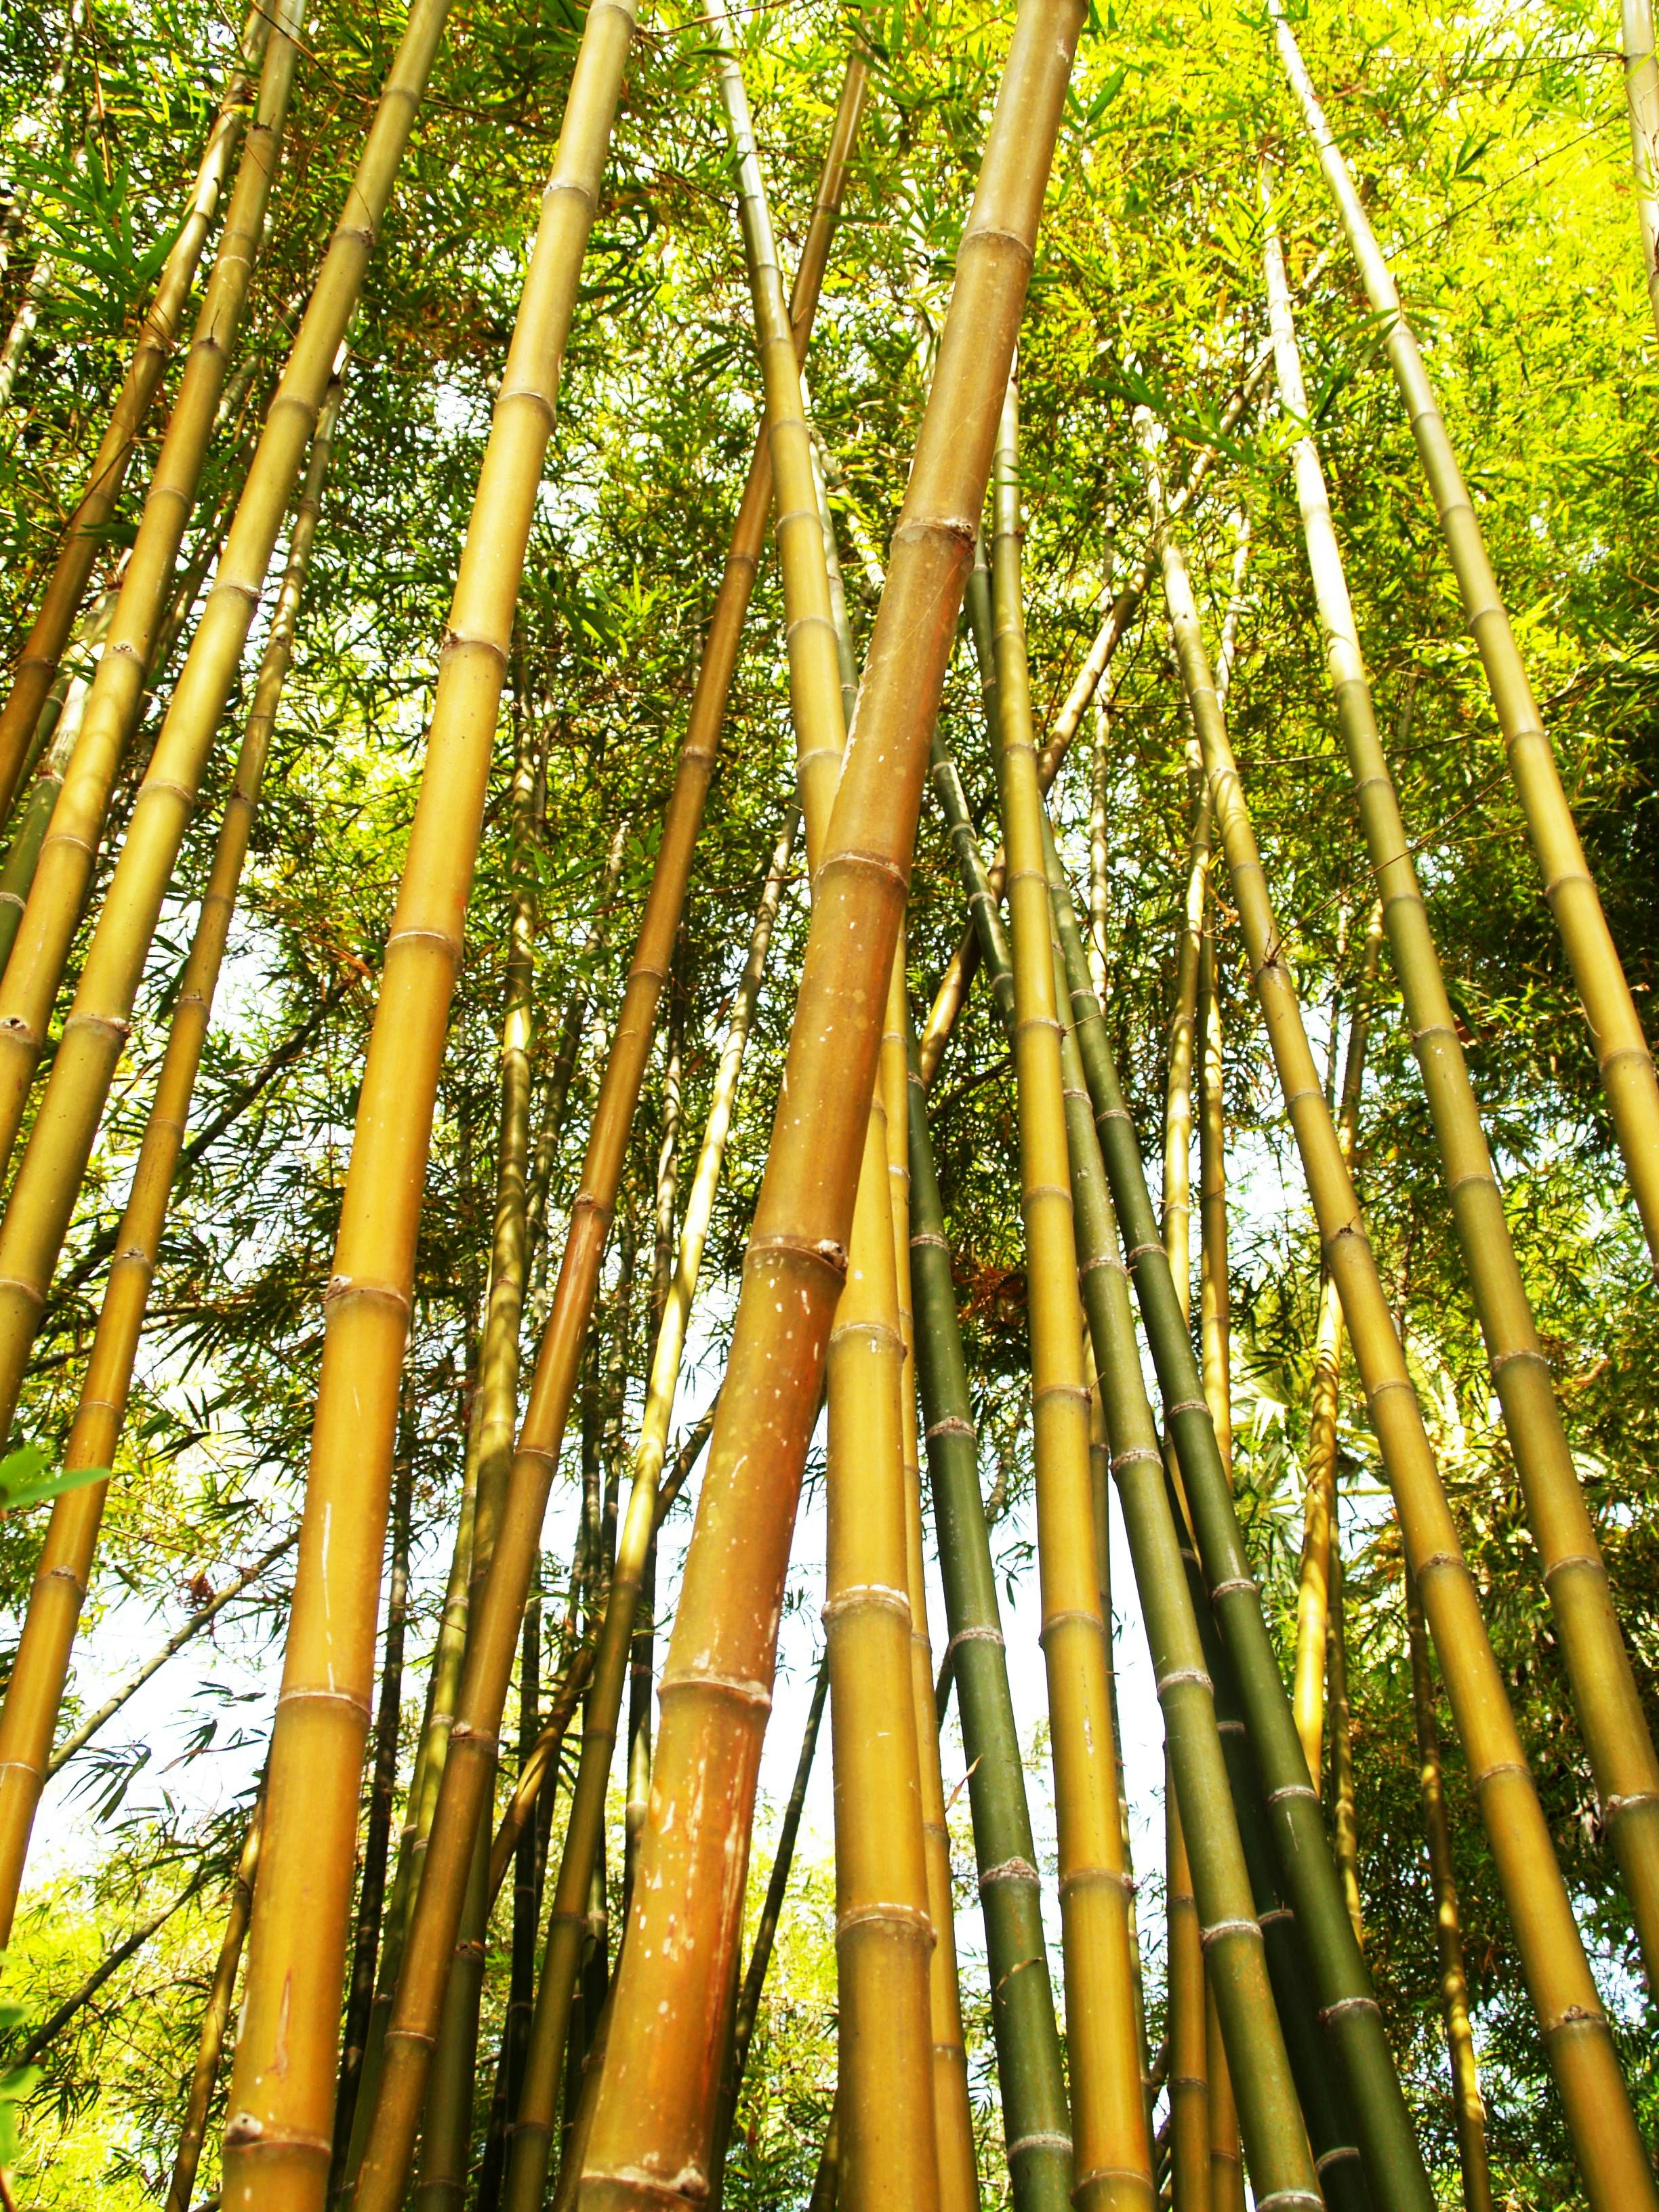  Bamboo  Tree  during Daytime  Free Stock Photo